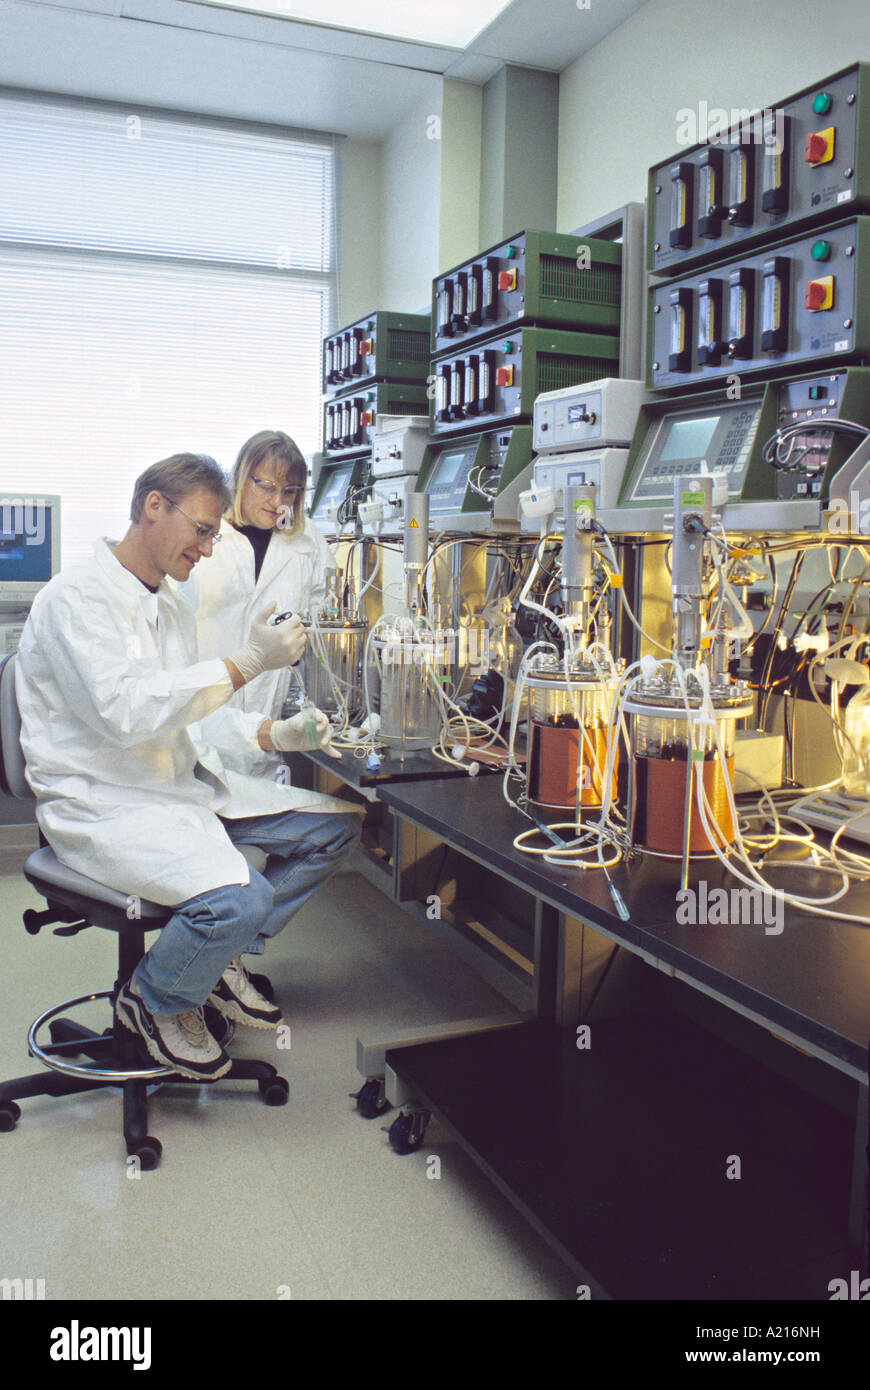 Model released man woman technicians working in bio engineering laboratory Stock Photo